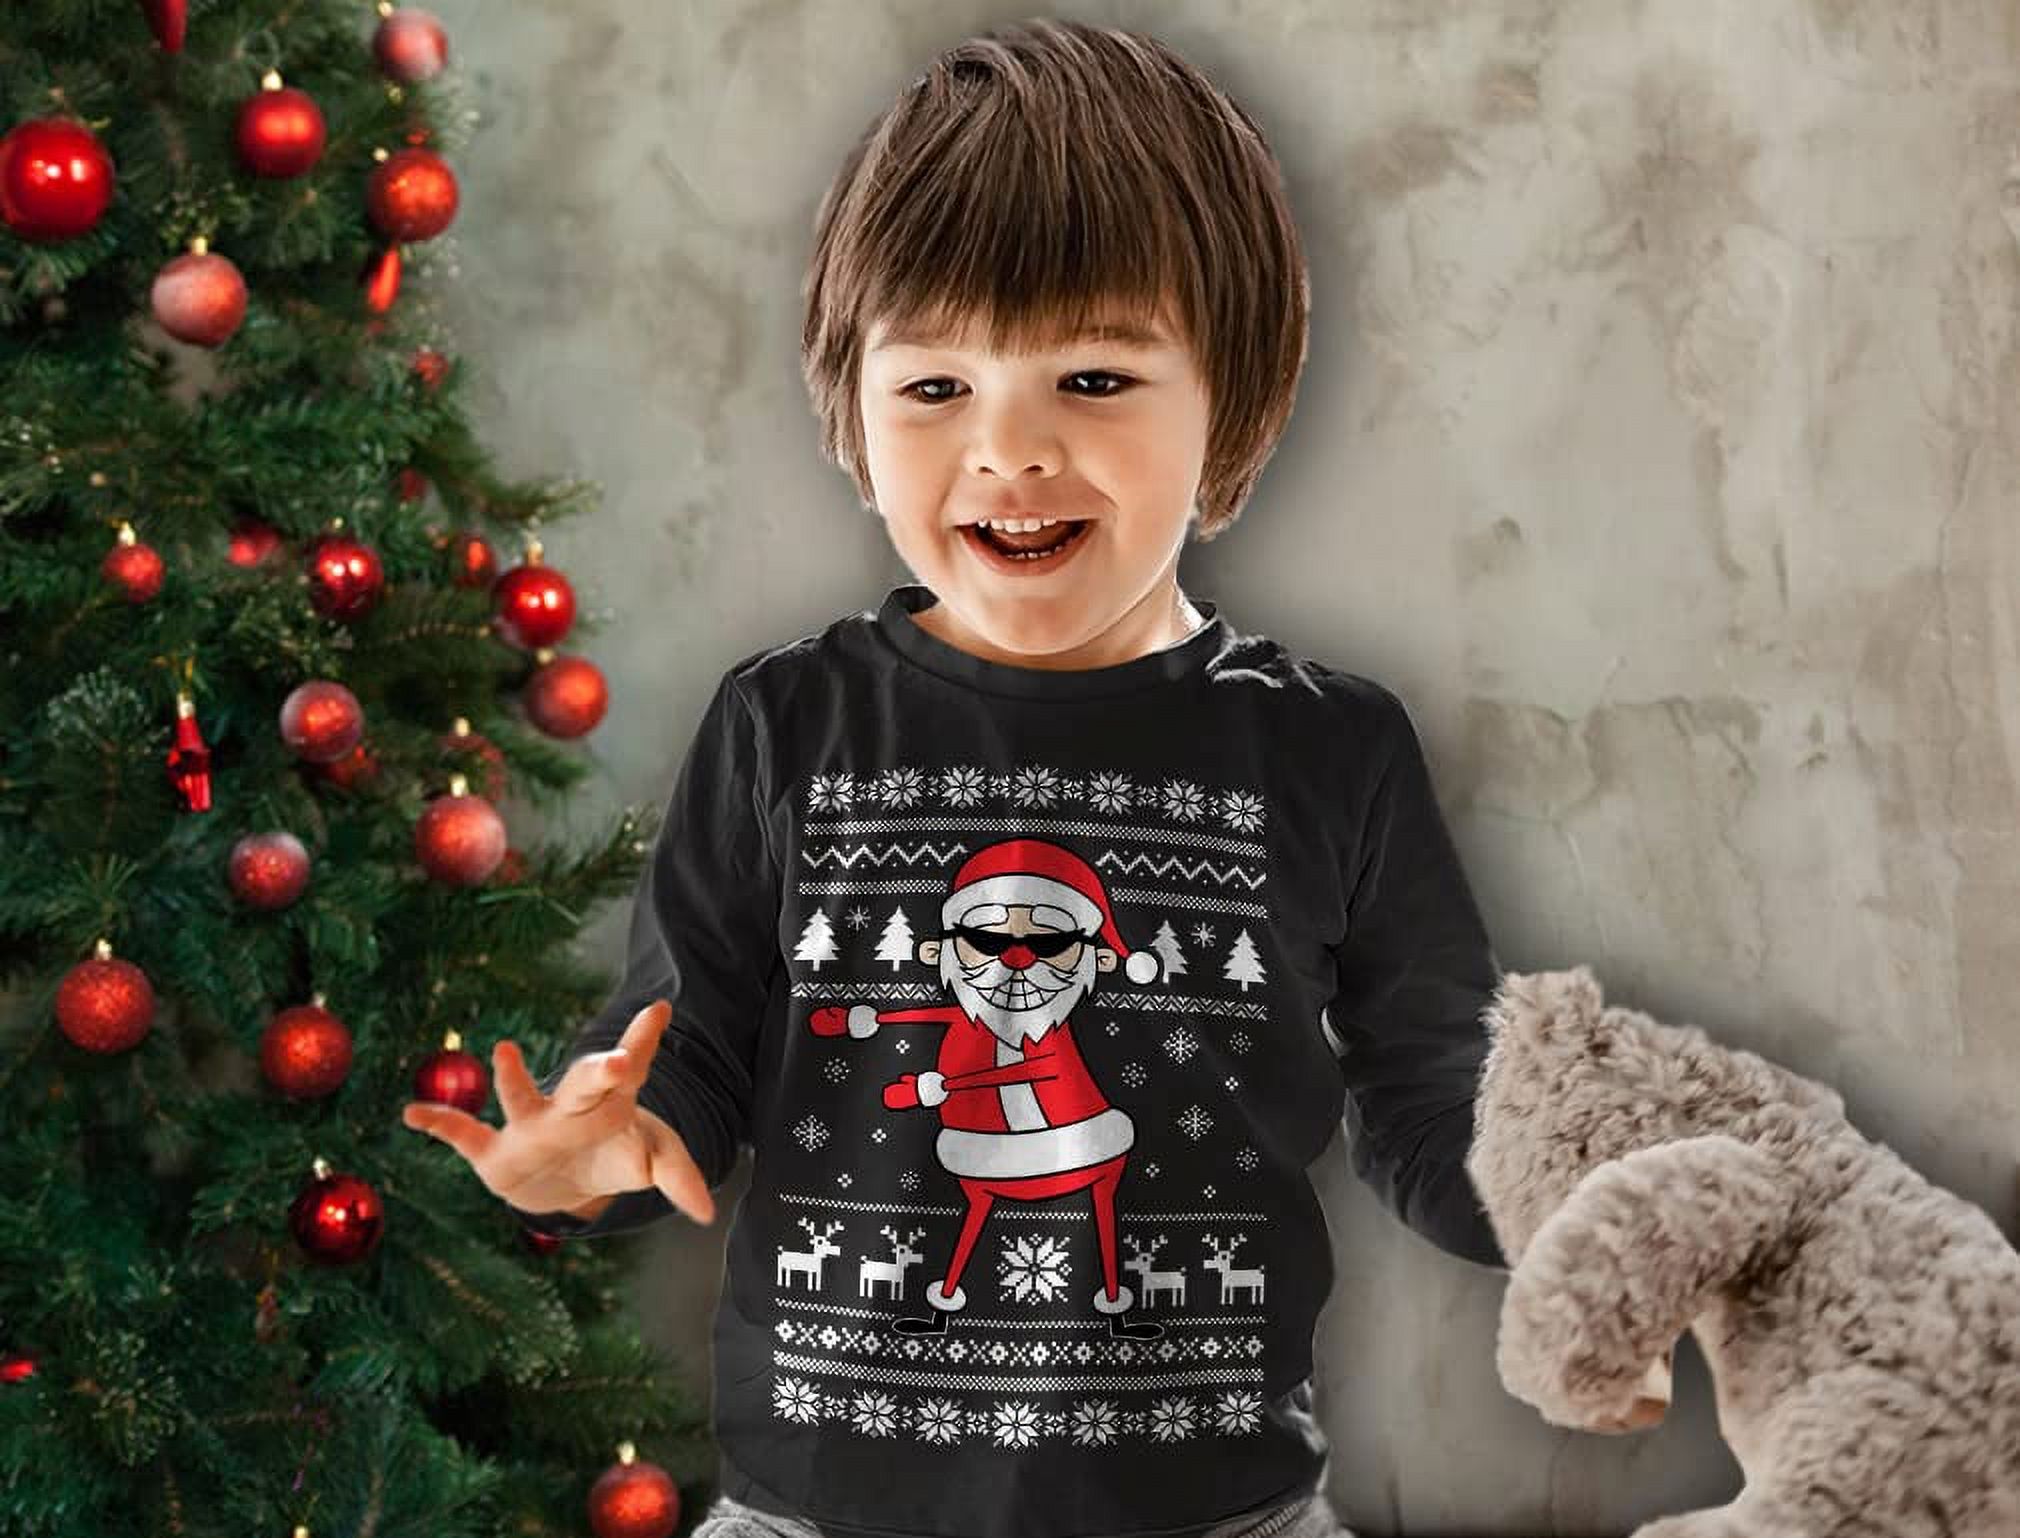 Tstars Boys Unisex Ugly Christmas Sweater Santa Floss Kids Christmas Gift Funny Humor Holiday Shirts Xmas Party Christmas Gifts for Boy Toddler Kids Long Sleeve T Shirt Ugly Xmas Sweater - image 3 of 6